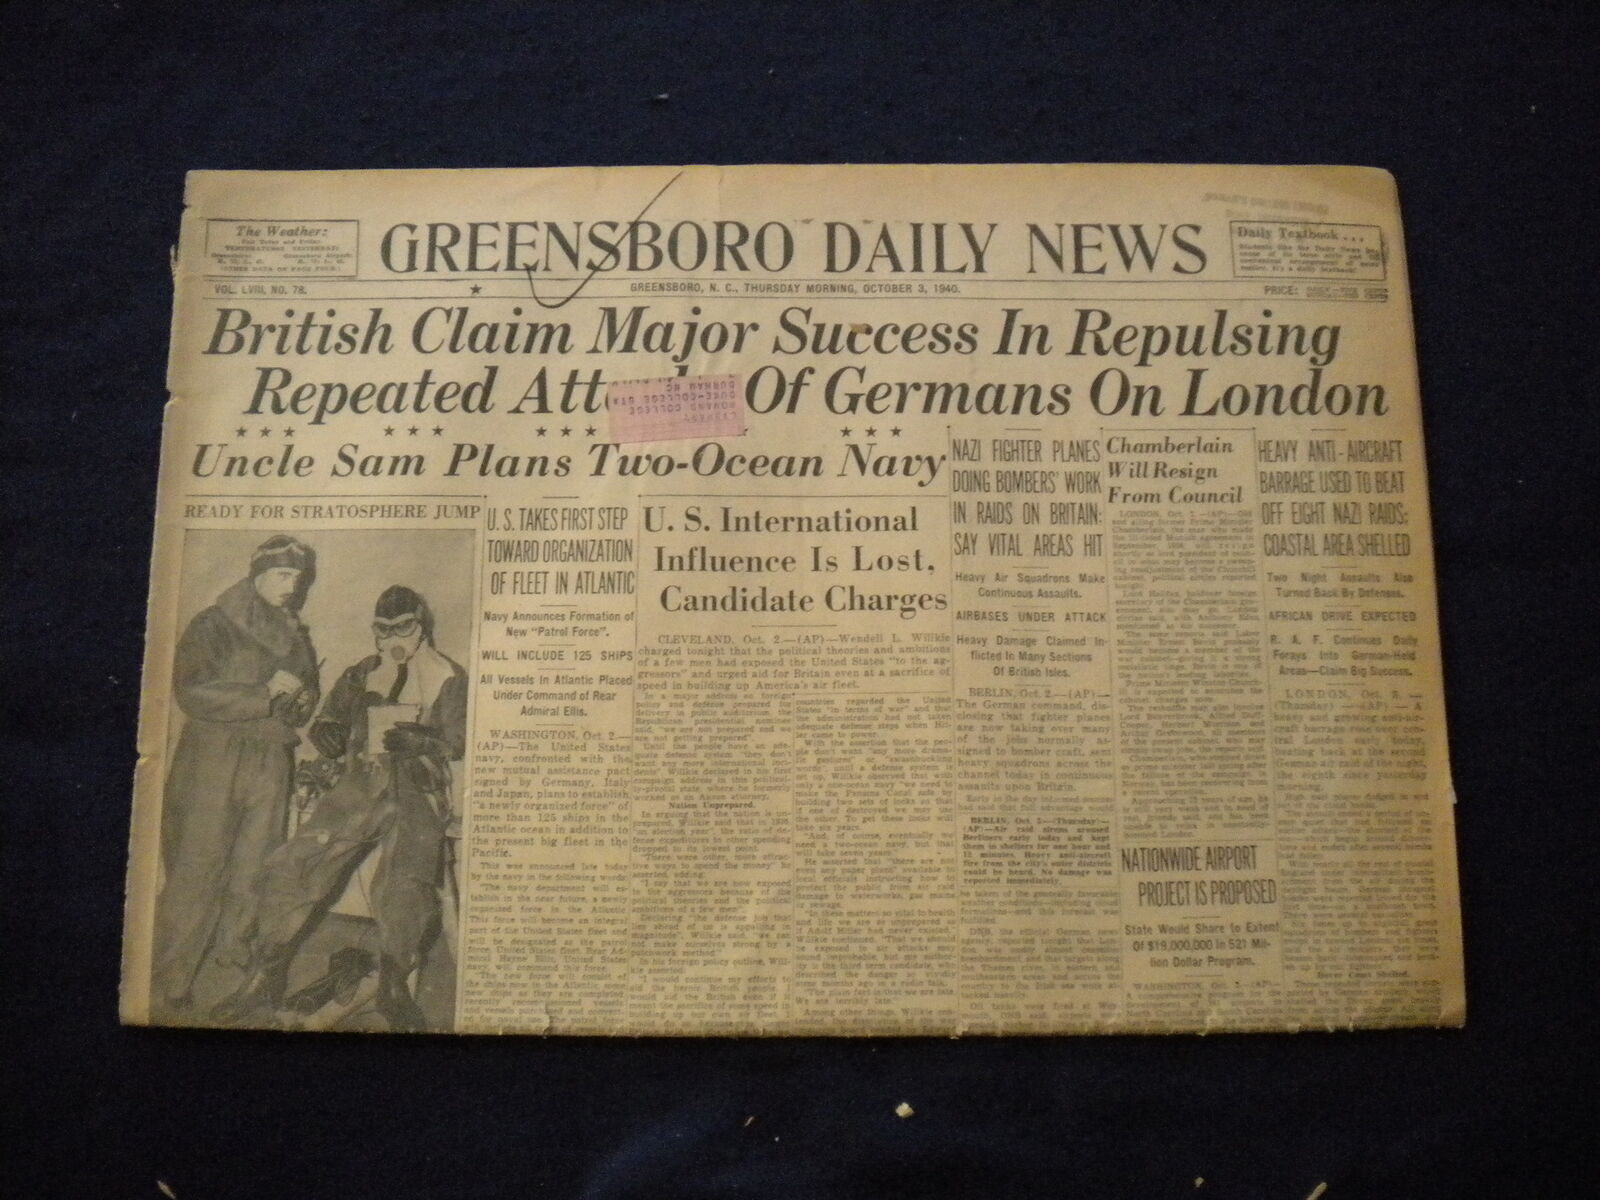 1940 OCT 3 GREENSBORO DAILY NEWS NEWSPAPER -BRITISH CLAIM MAJOR SUCCESS- NP 6029